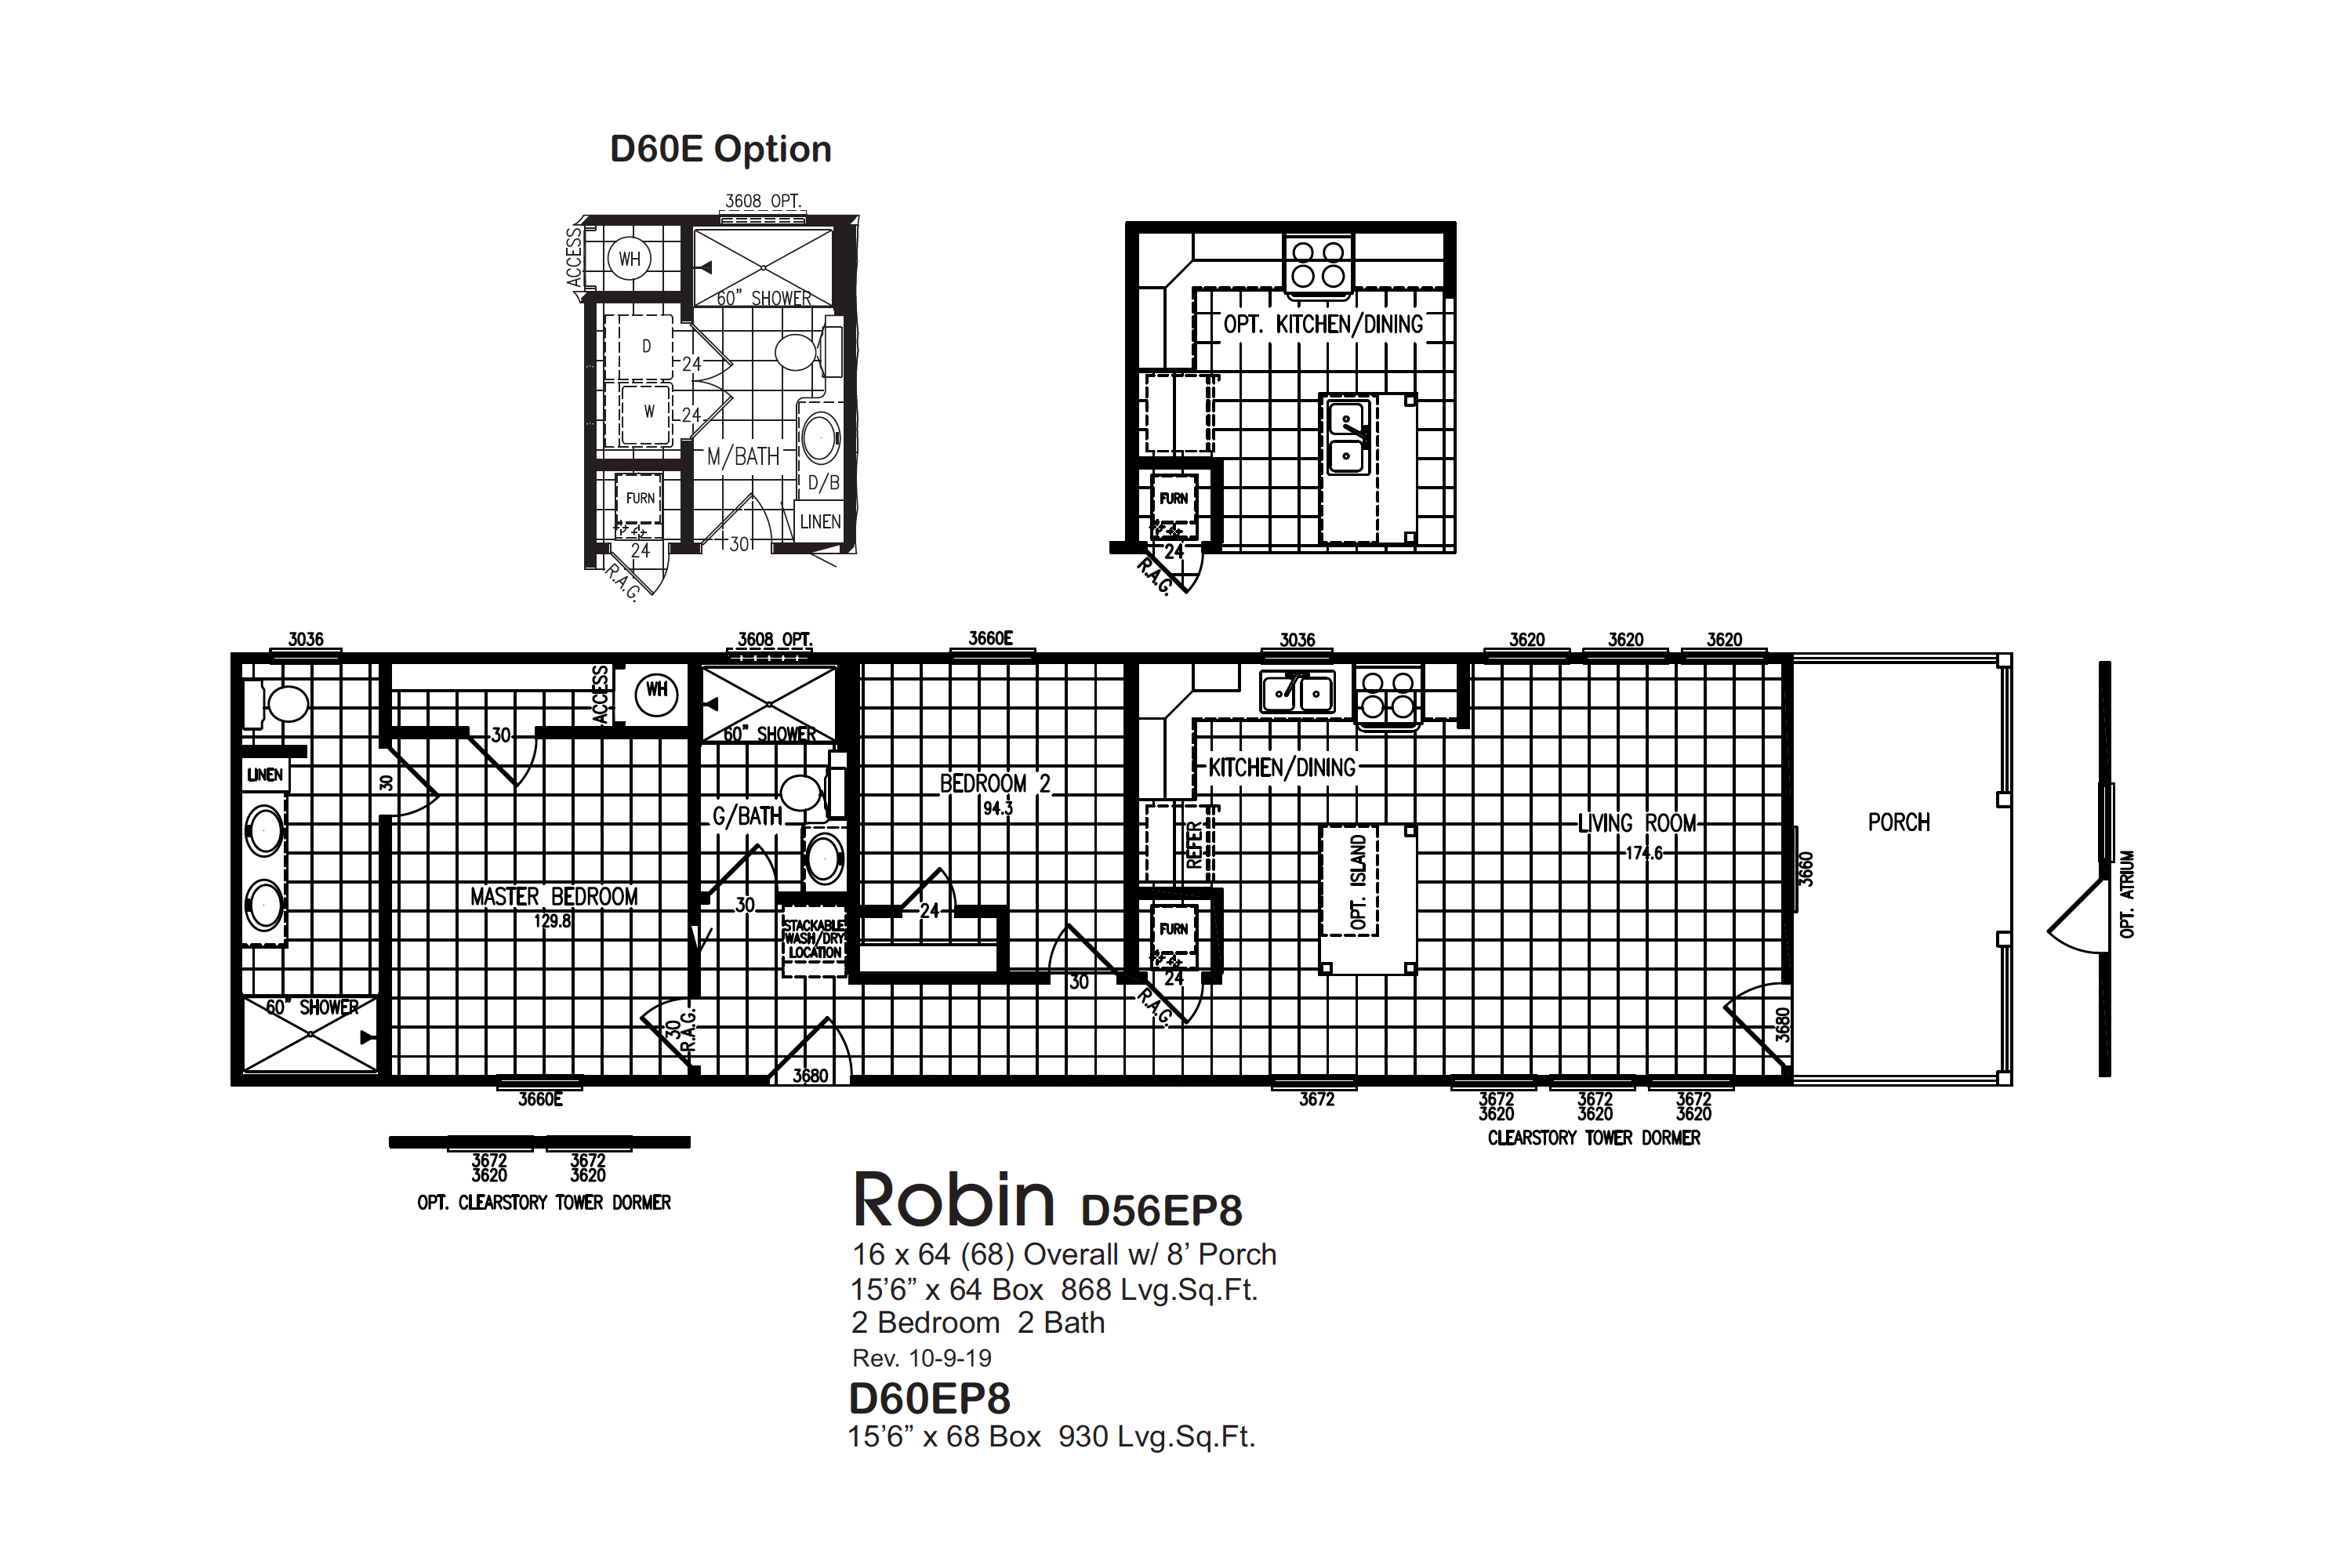 Robin D56EP8 D60EP8 Floorplan